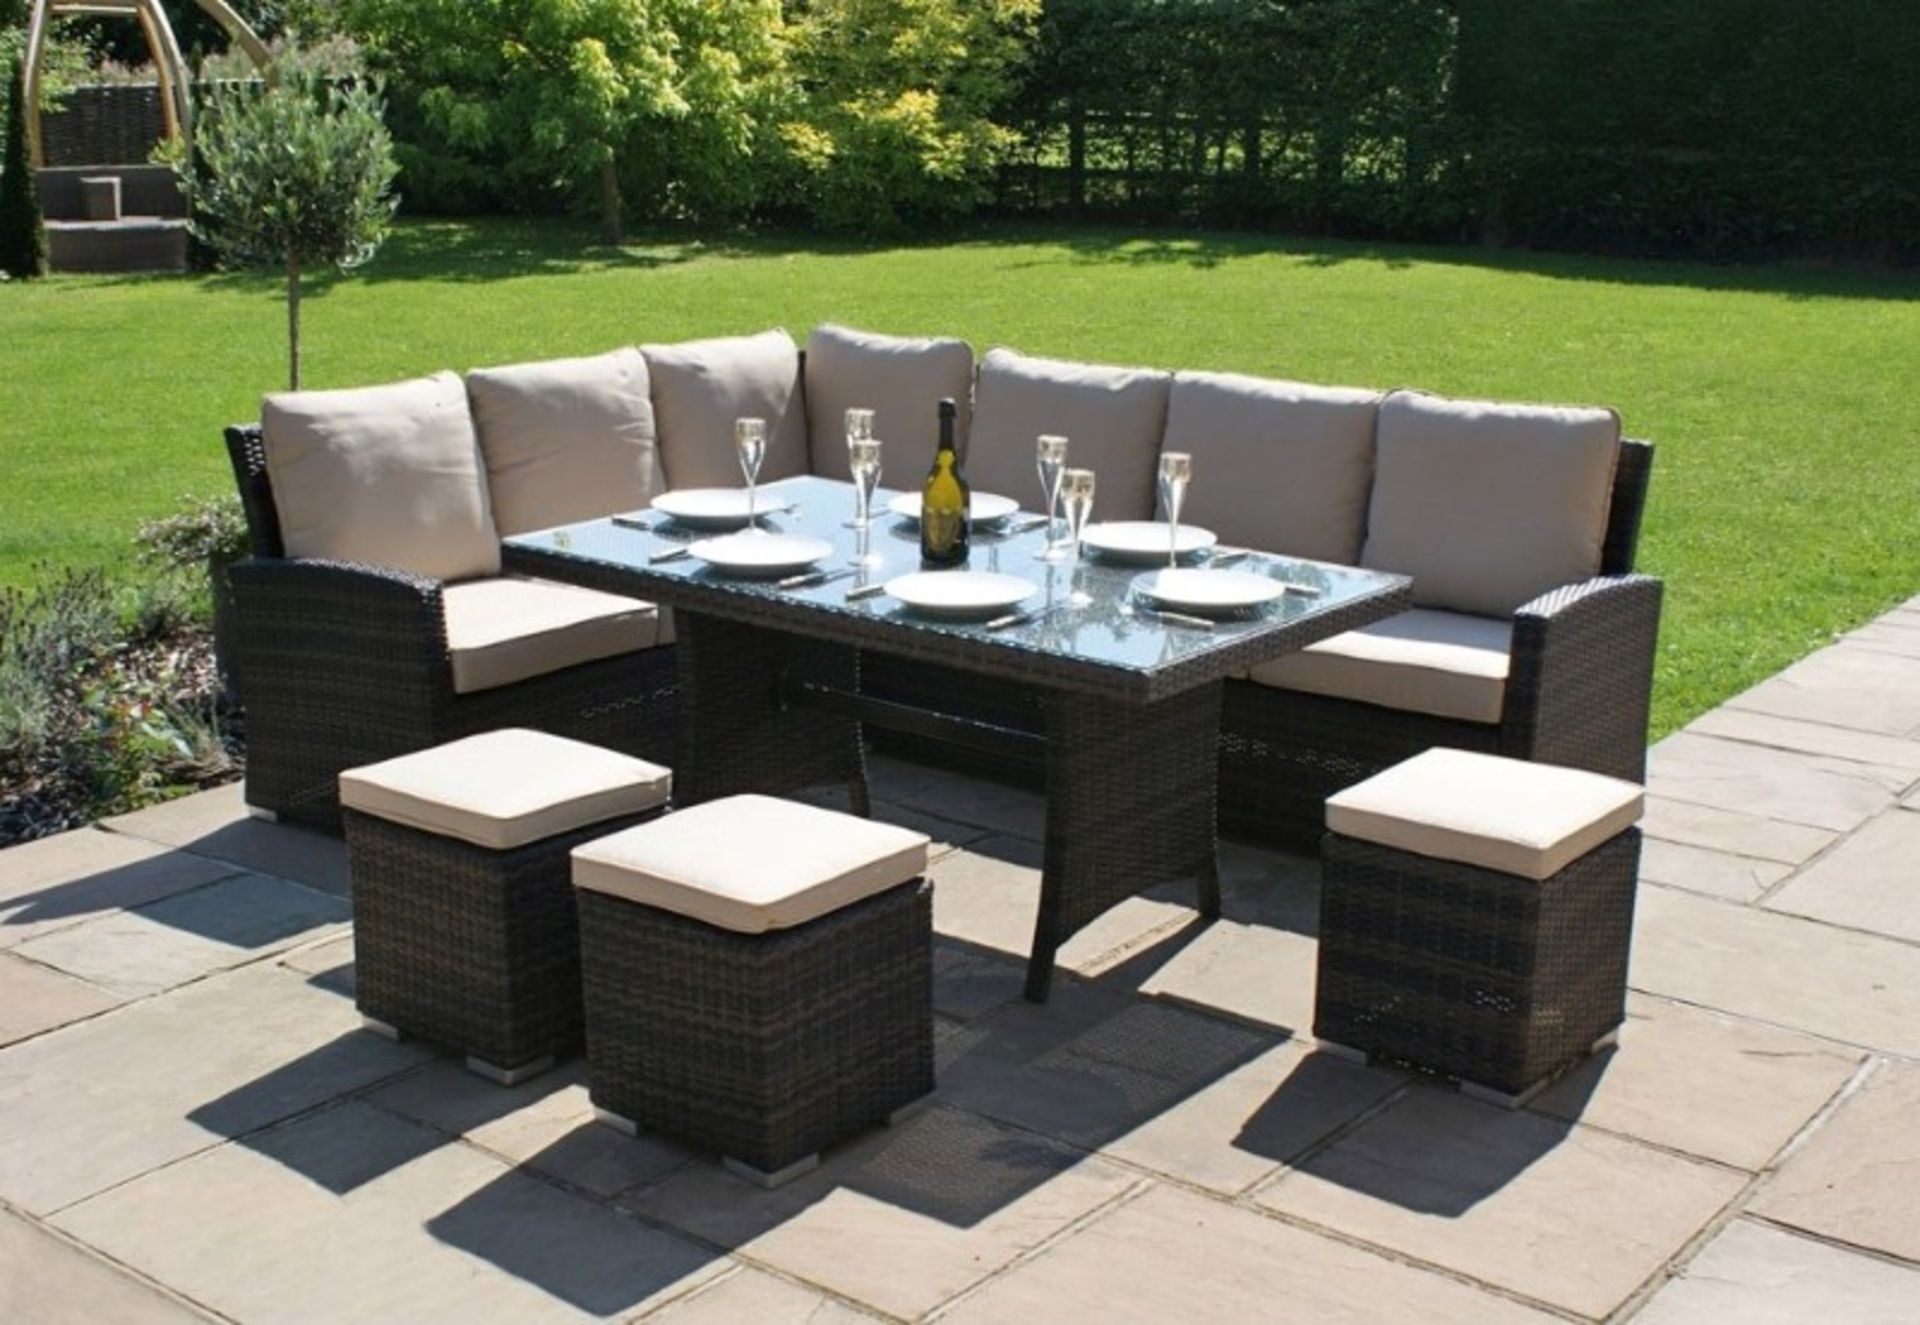 + VAT Brand New Chelsea Garden Company 8-Seater Light Brown Rattan Luxury Corner Outdoor Dining Set - Image 2 of 3